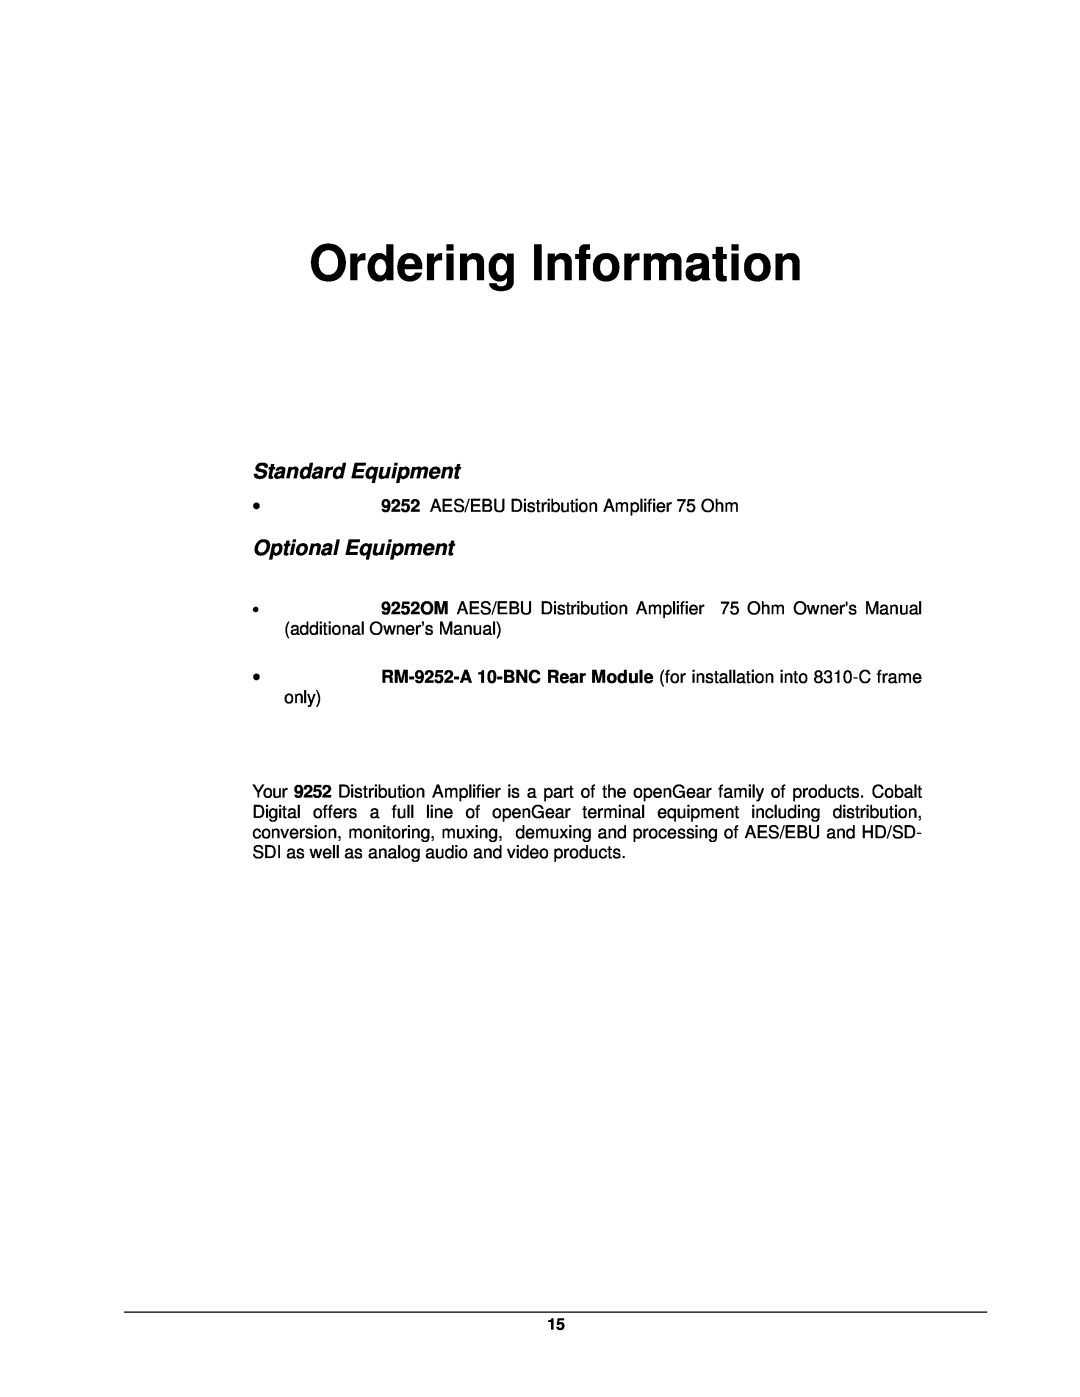 Cobalt Networks 9252 user manual Ordering Information, Standard Equipment, Optional Equipment 